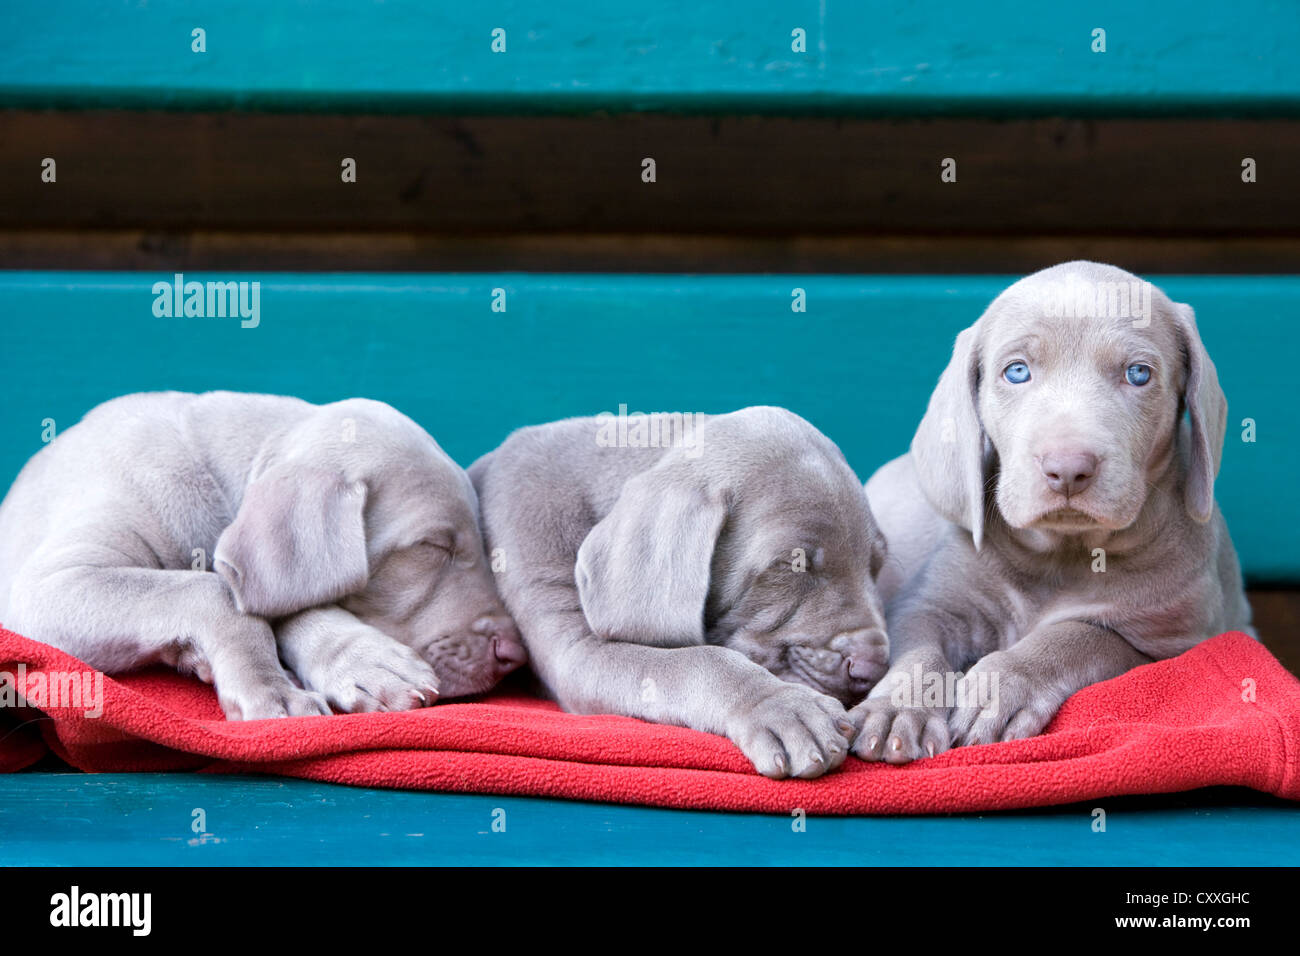 Weimaraner dogs, puppies, sleeping on a bench, North Tyrol, Austria, Europe Stock Photo